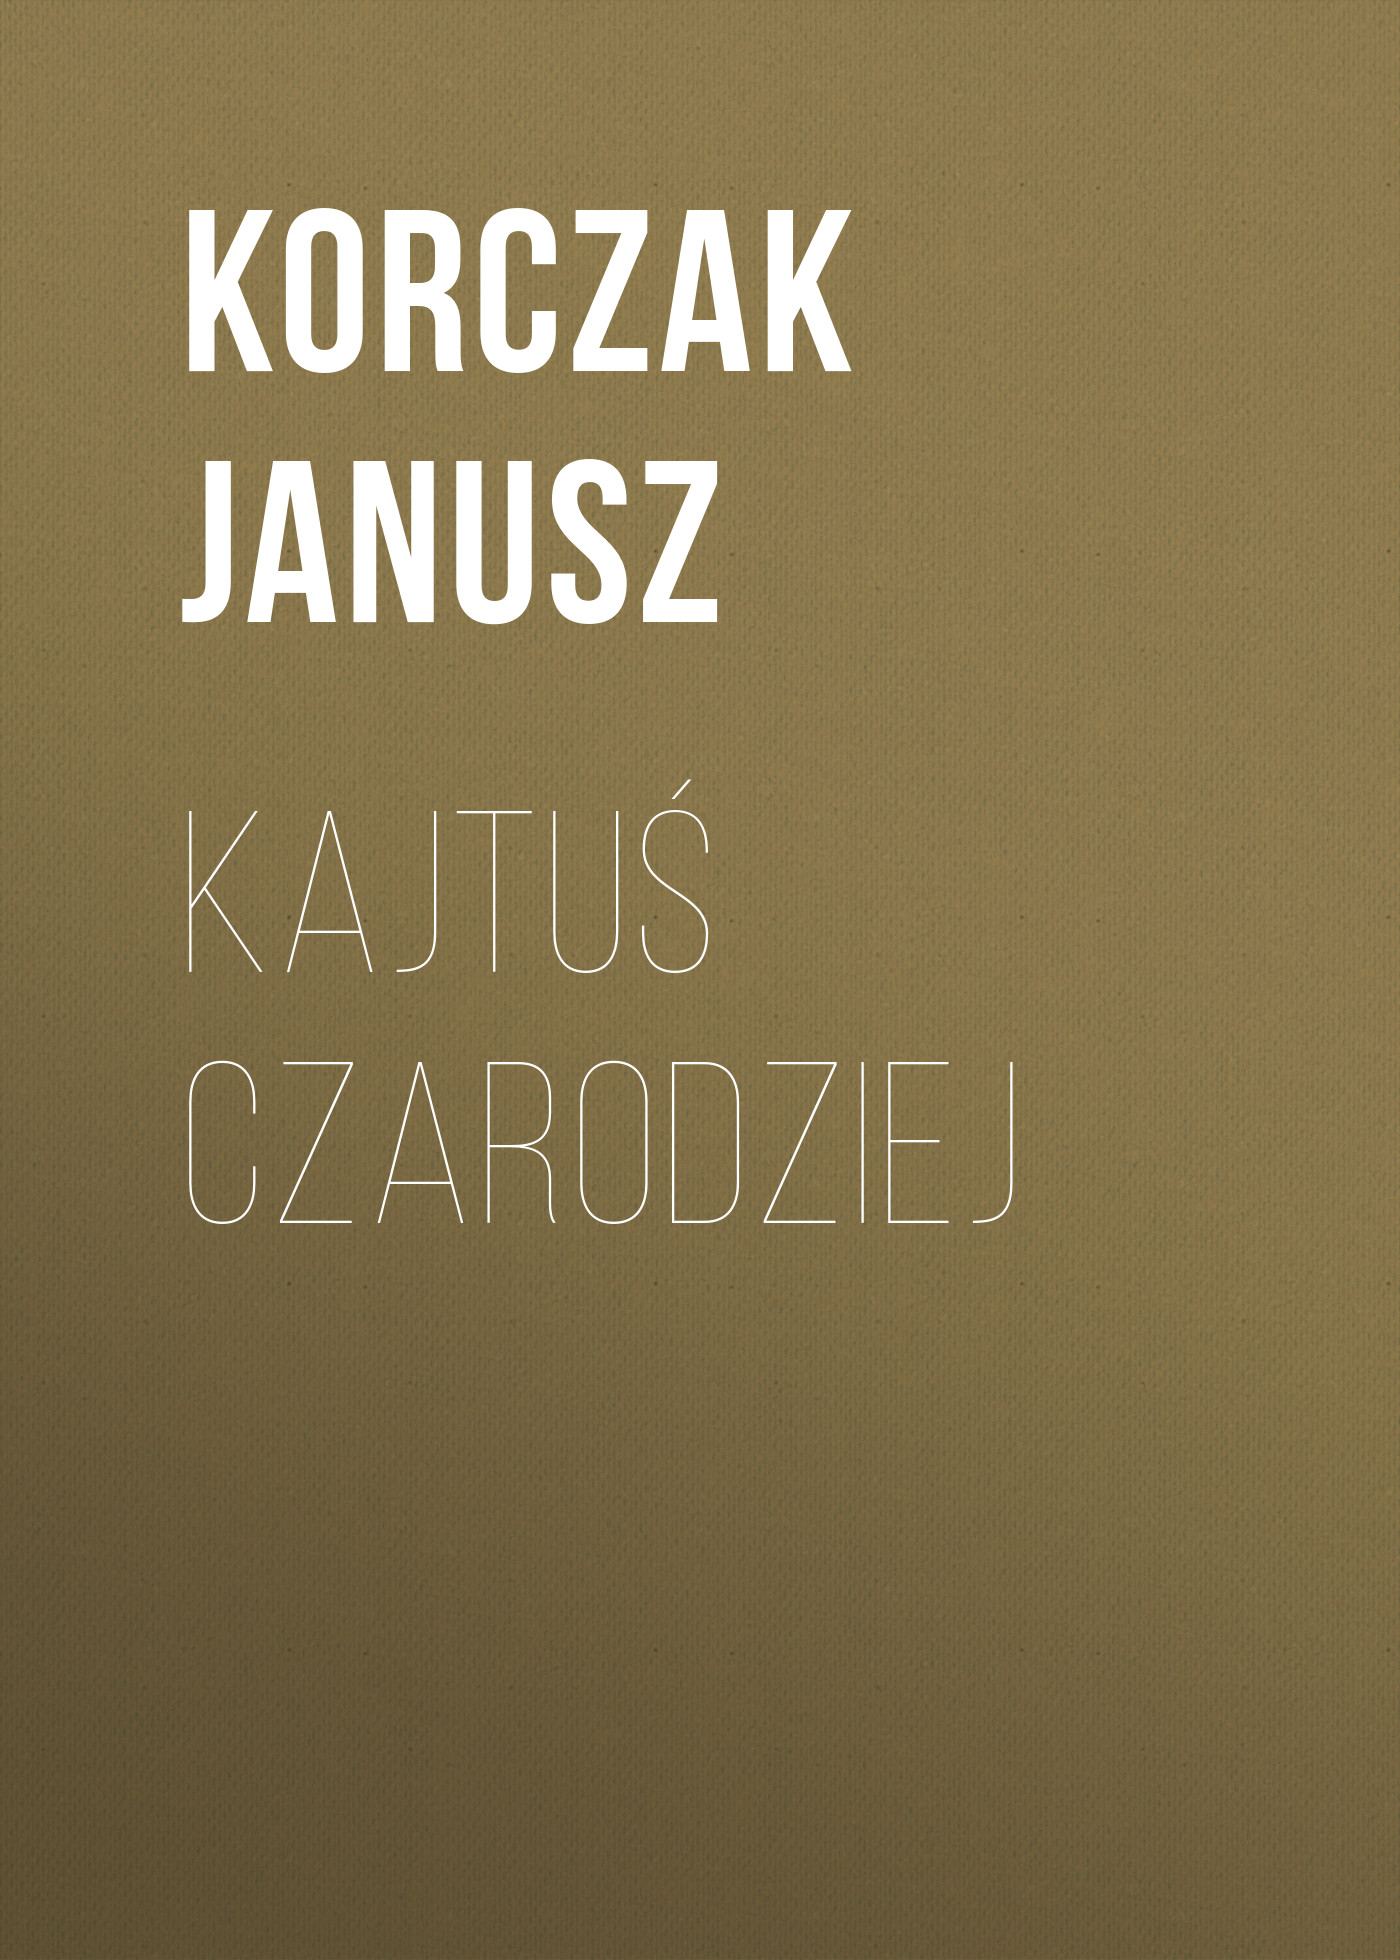 Скачать Kajtuś Czarodziej - Janusz Korczak